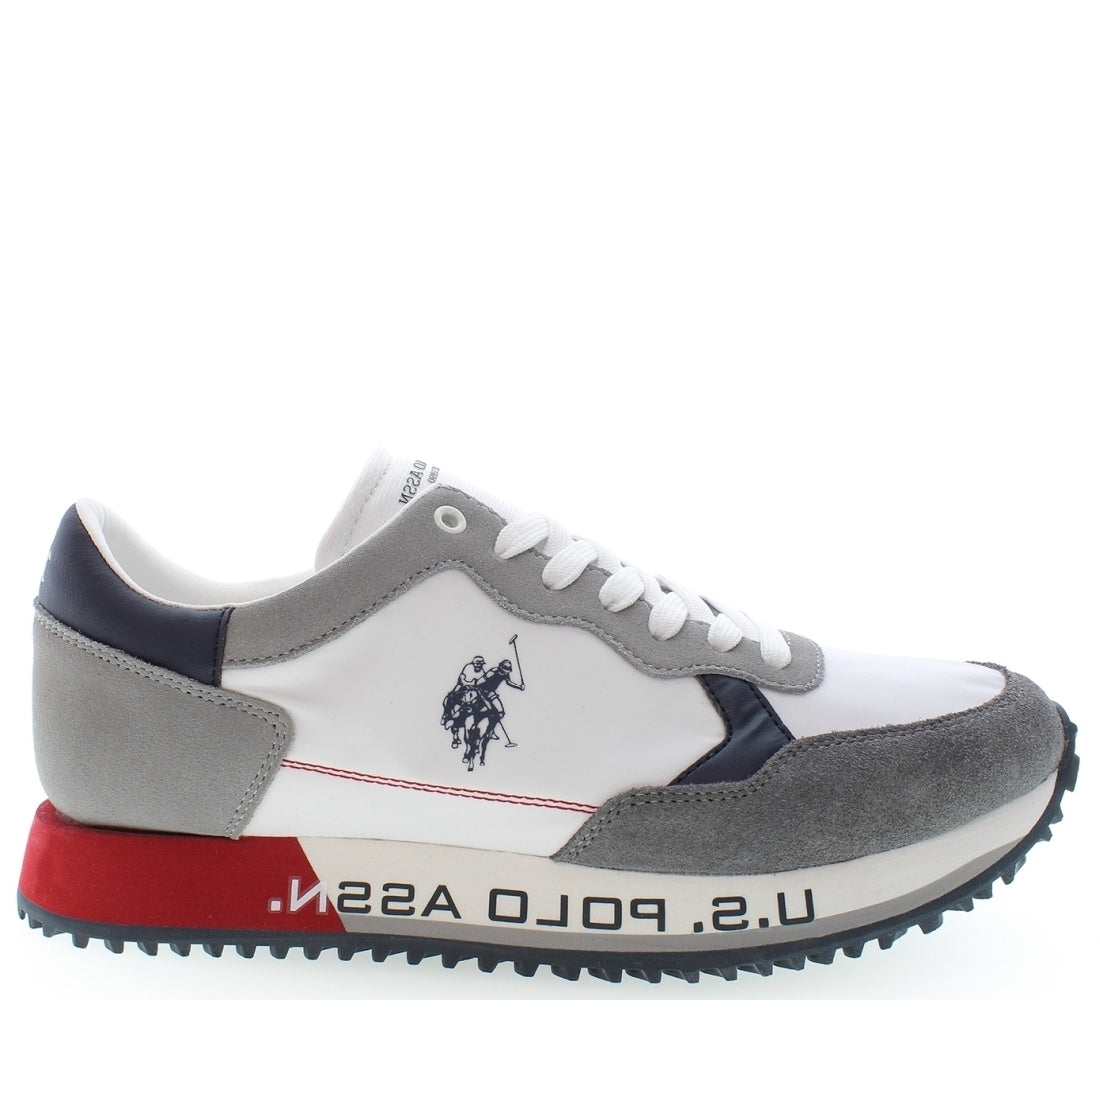 U.S. Polo Assn. Mens Whi Dbl cleef shoes | Vilbury London